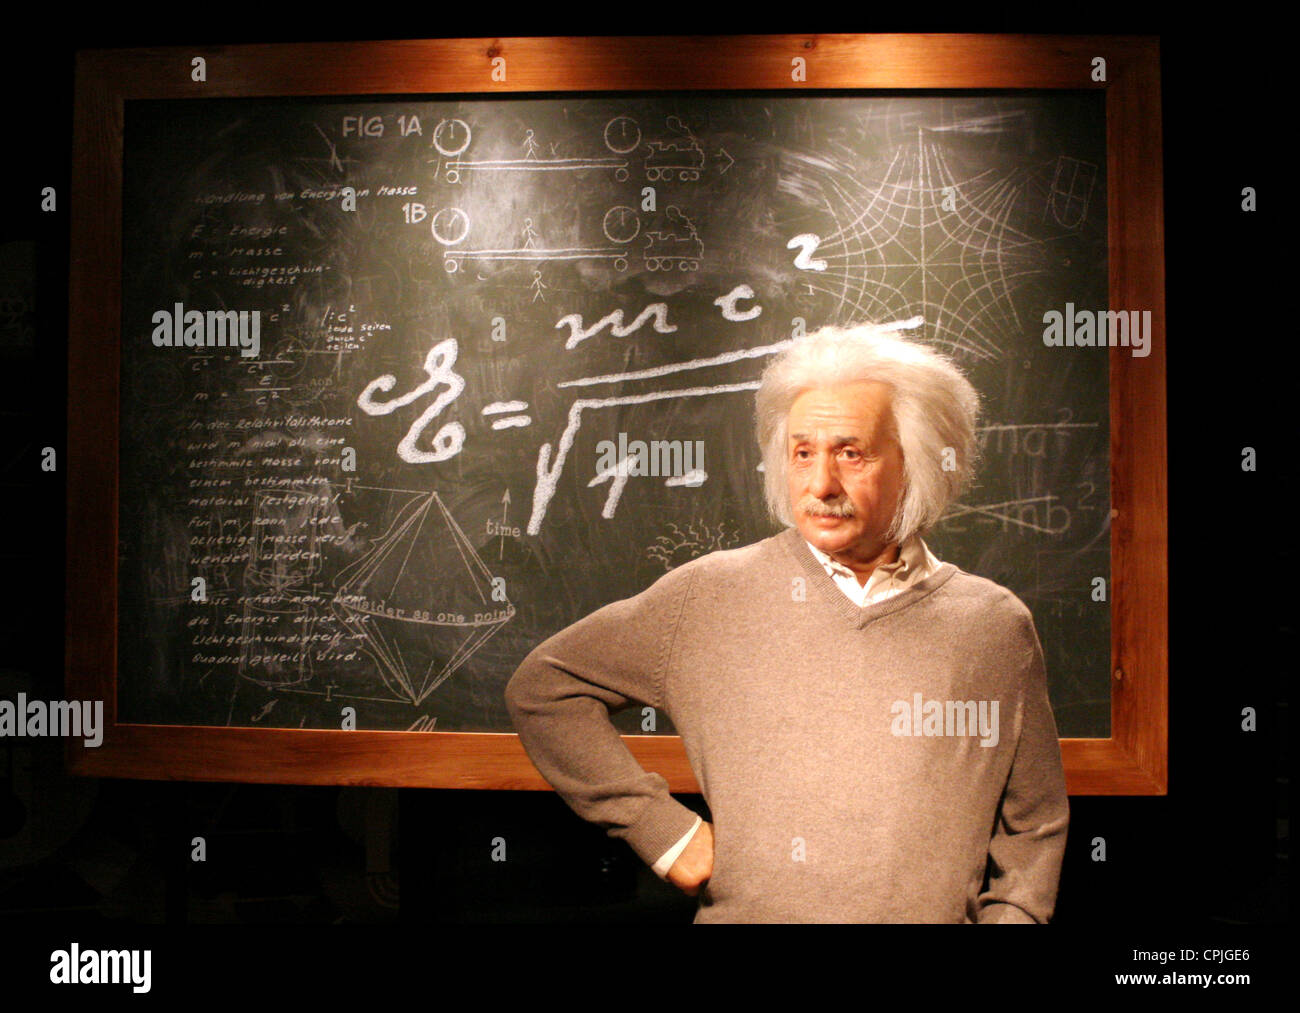 Une cire figure d'Albert Einstein dans les oeuvres de cire Madame Tussauds, Berlin, Allemagne Banque D'Images